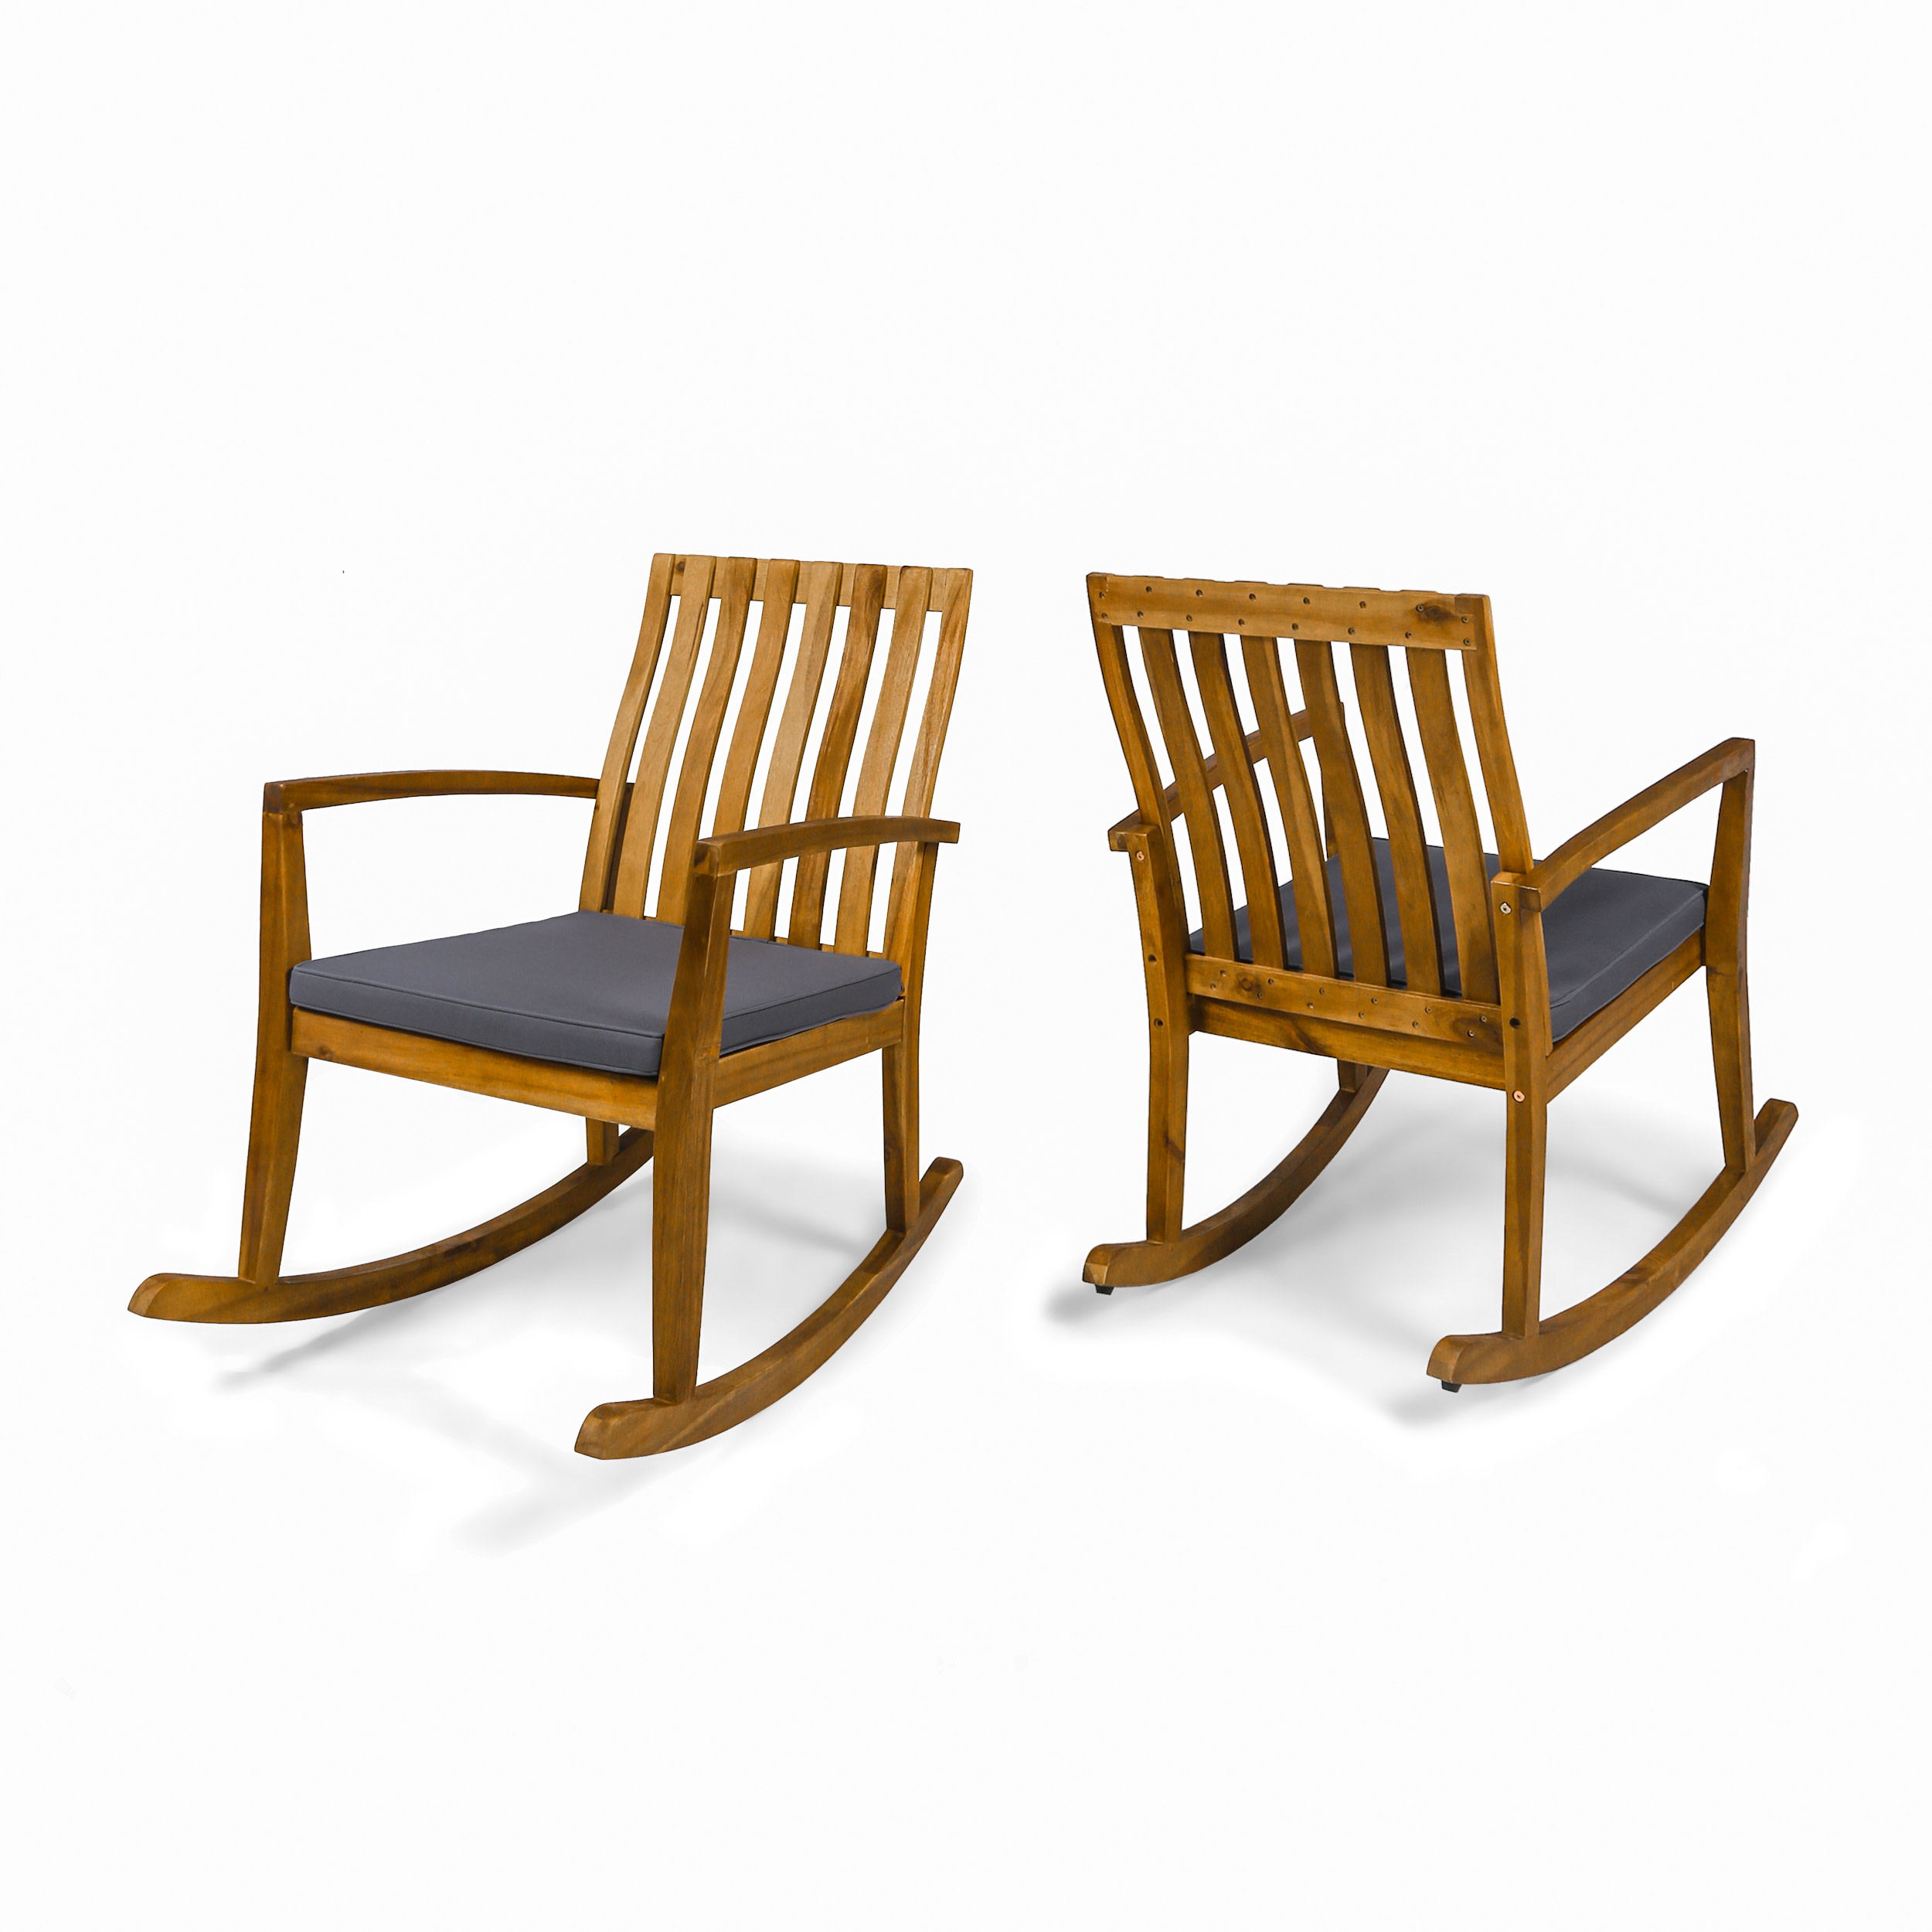 GDF Studio Adderbury Outdoor Acacia Wood Rocking Chair with Cushions, Set of 2, Teak and Dark Gray - image 1 of 9